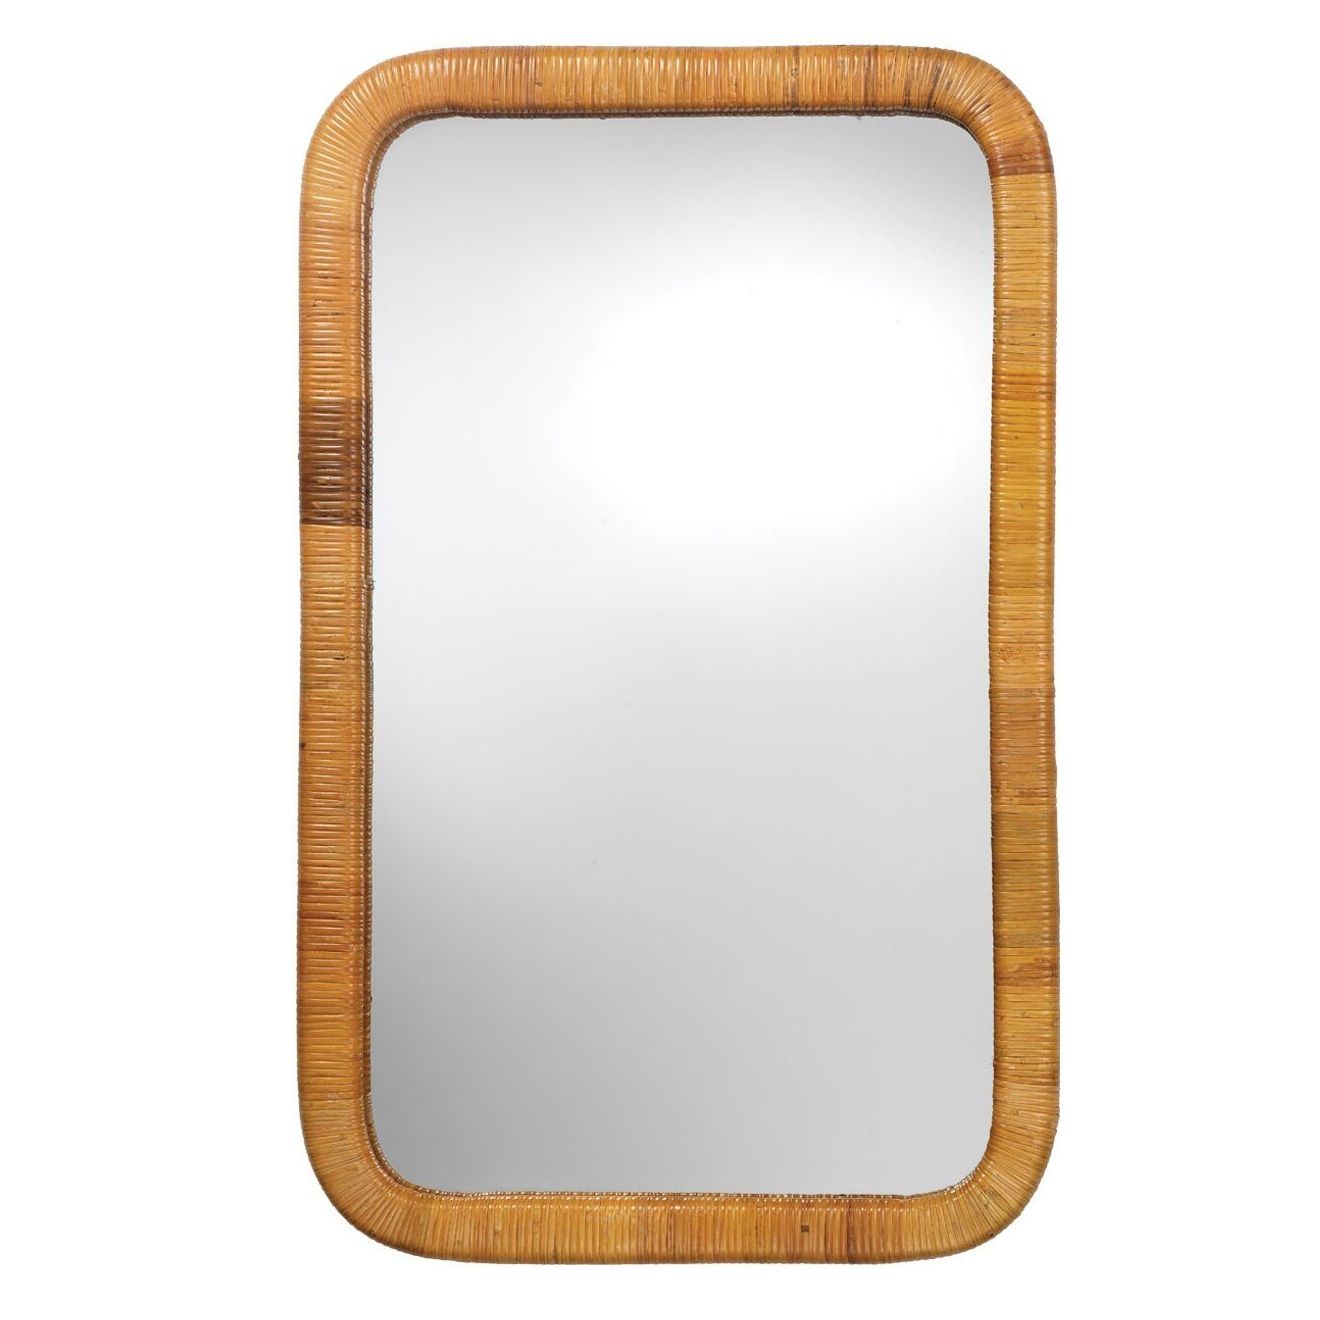 33" Natural Rattan Frame Rectangular Wall Mirror – Walmart For Natural Iron Rectangular Wall Mirrors (View 11 of 15)